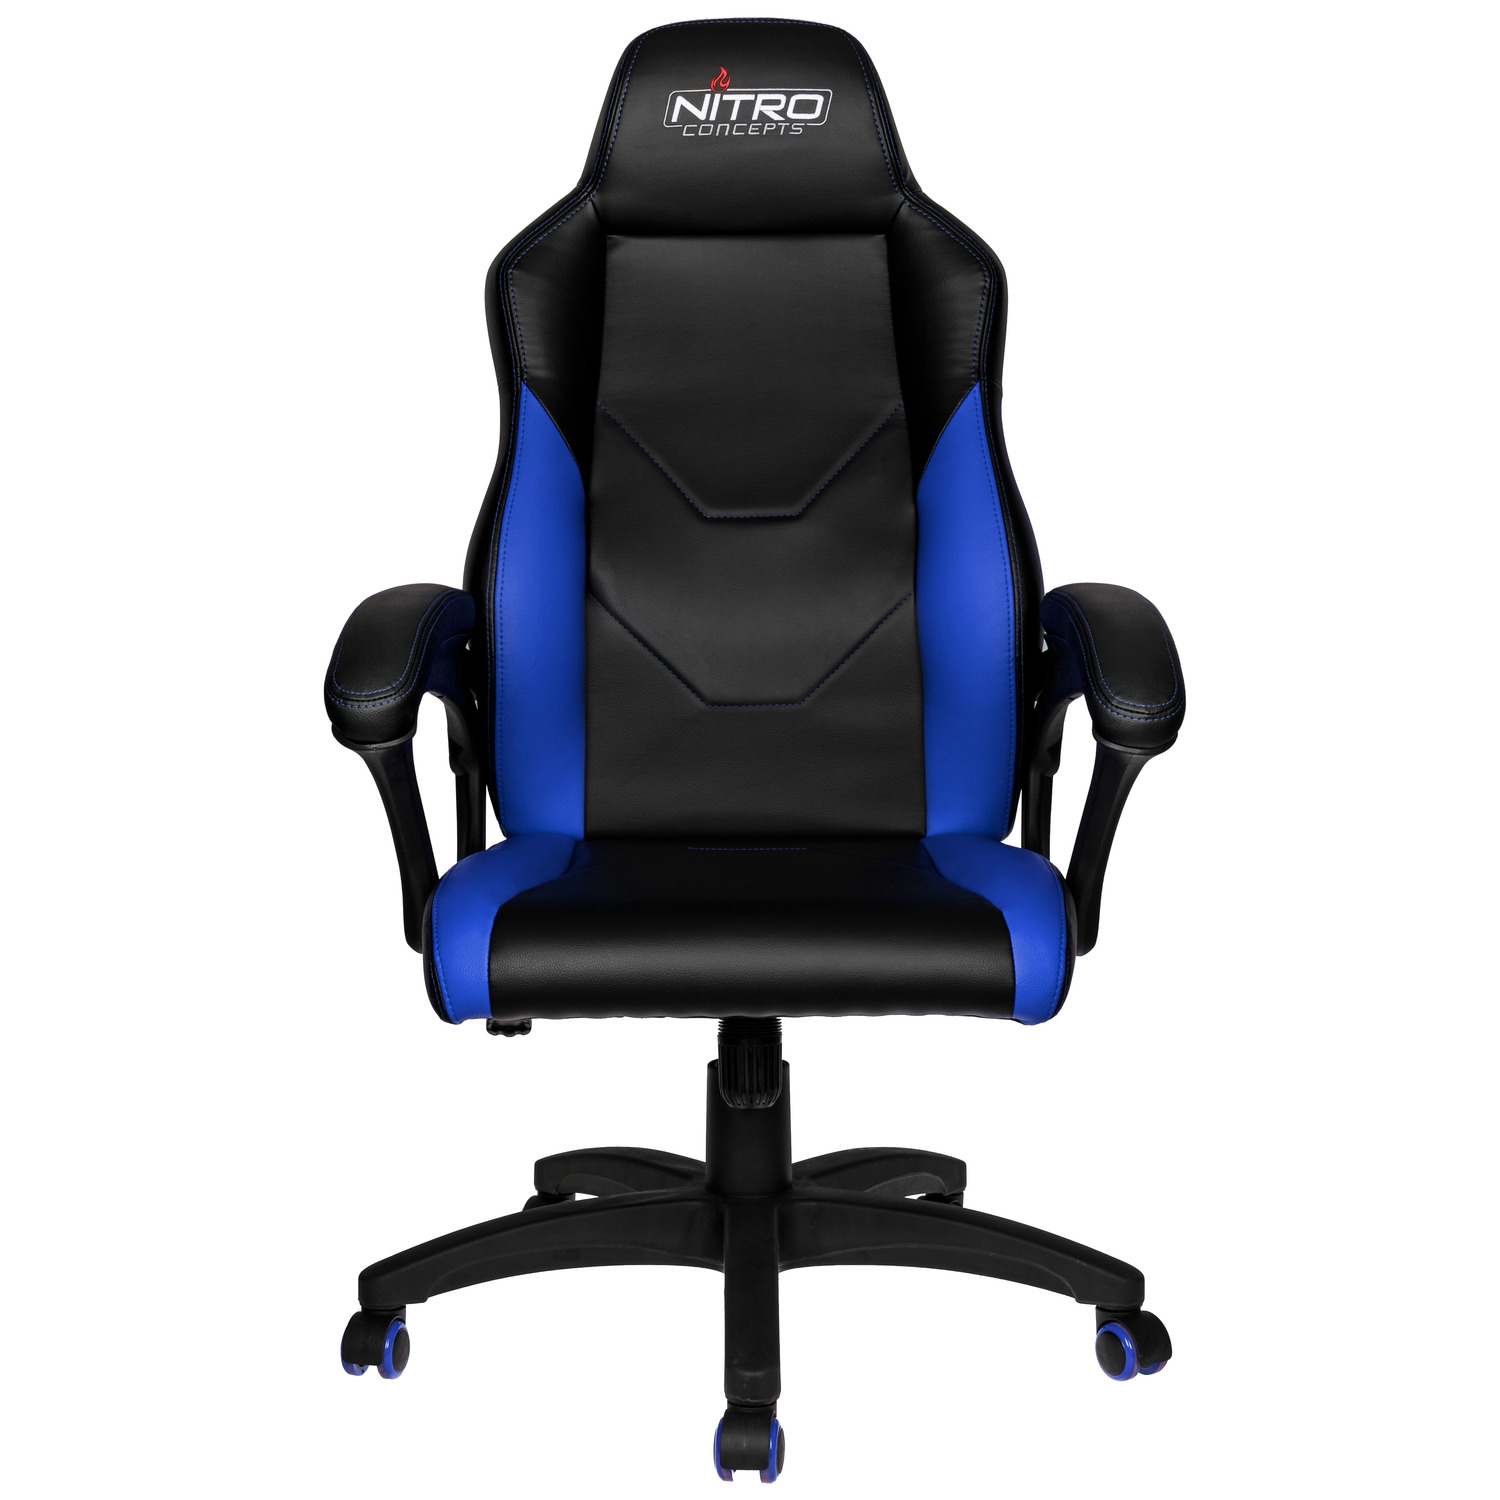 Nitro Concepts - C100 Gaming Chair Black/Blue